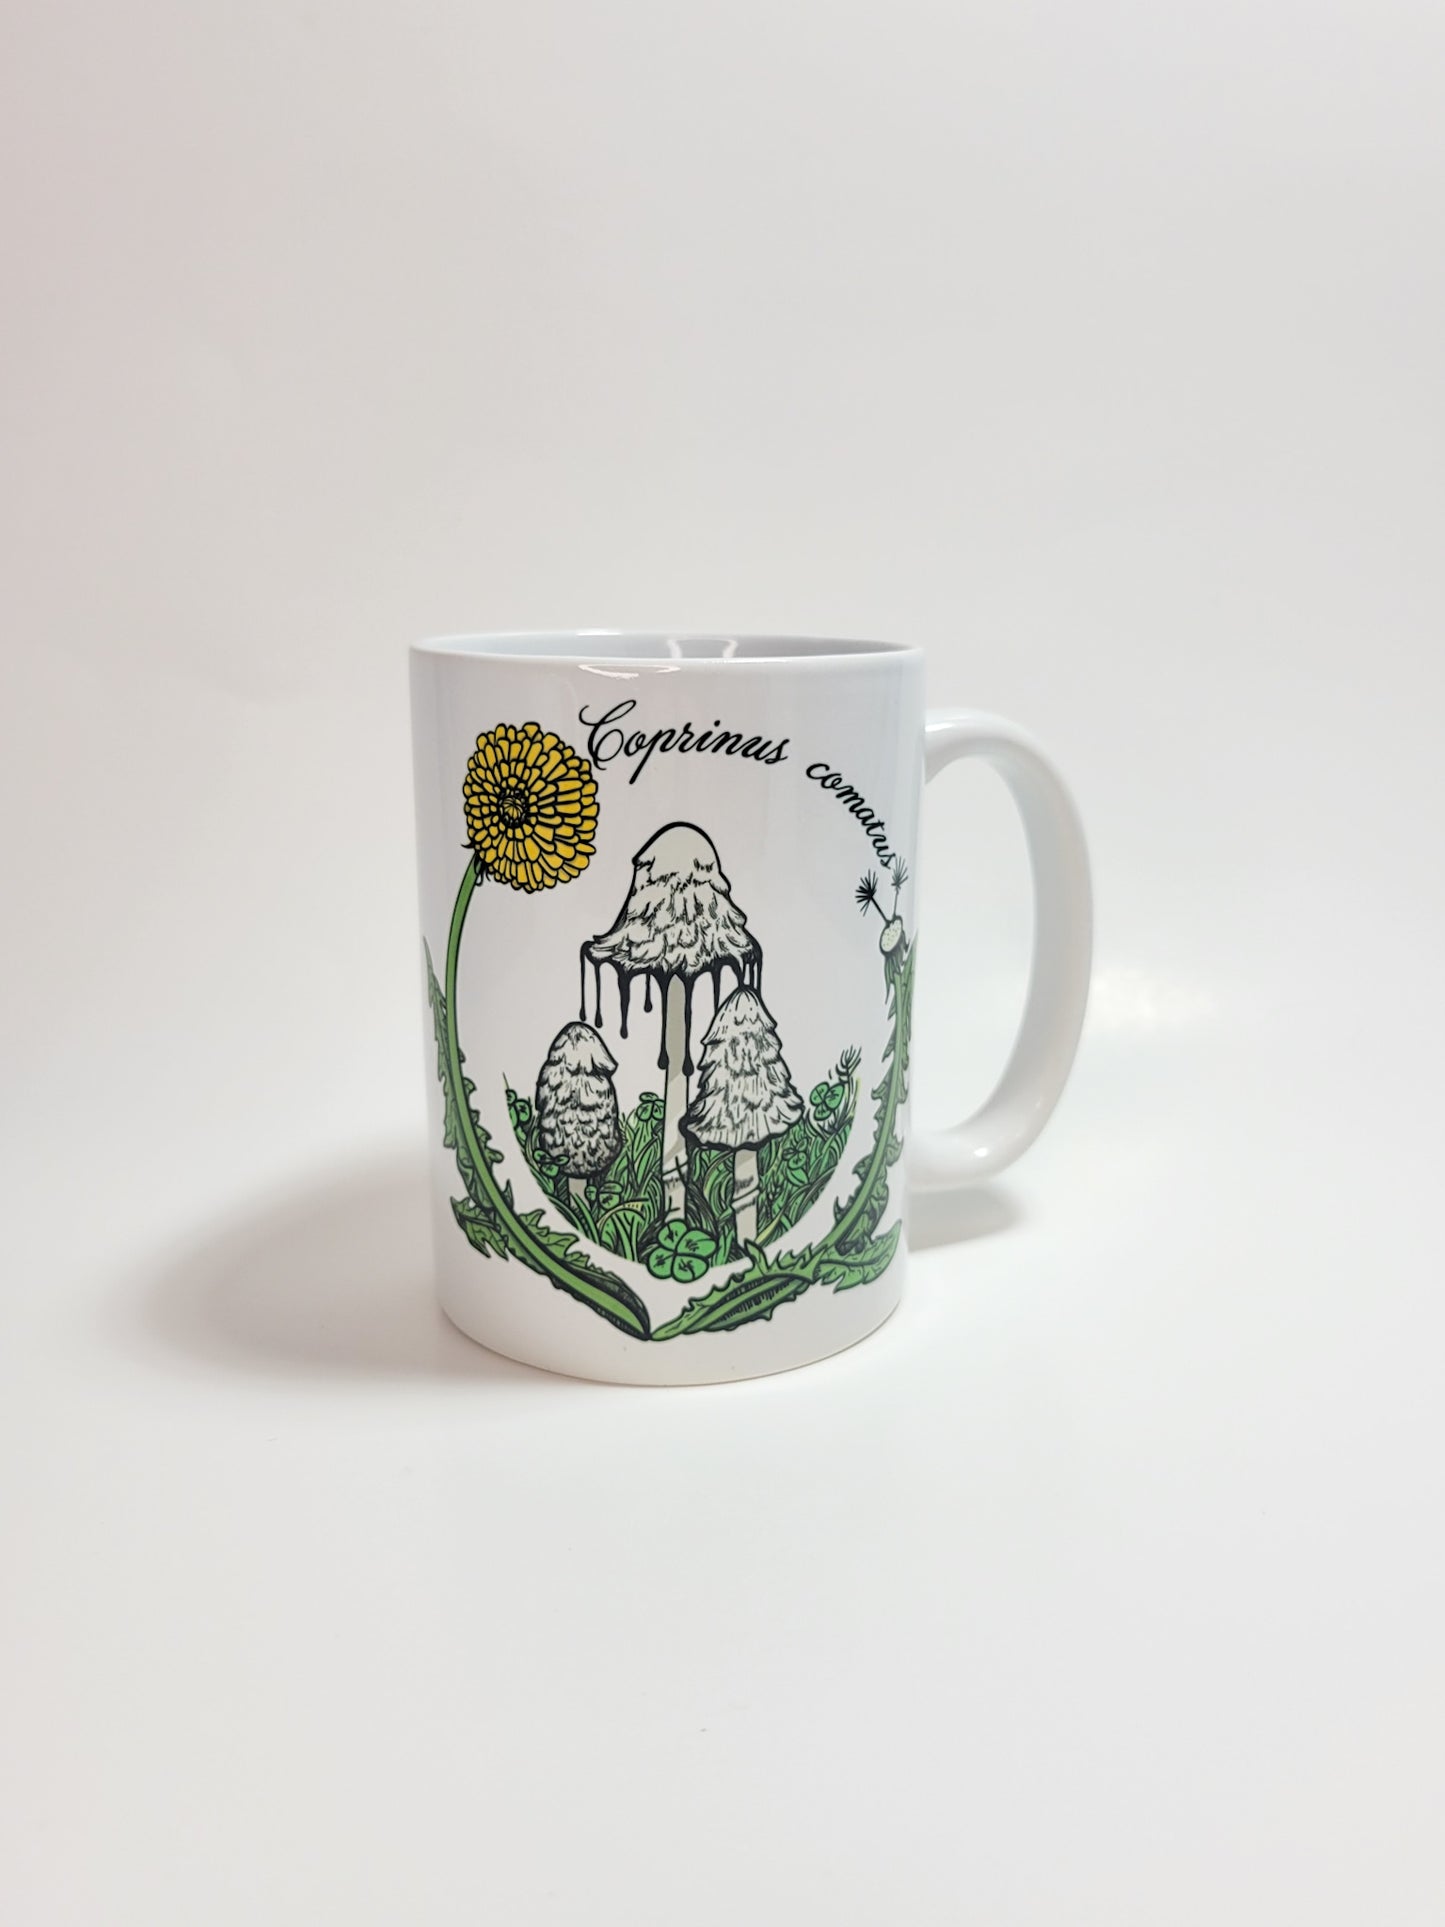 Coprinus Comatus | Shaggy Mane Mushroom Mug | Mushroom Artwork on Ceramic Cup | 11oz/15oz Sizes